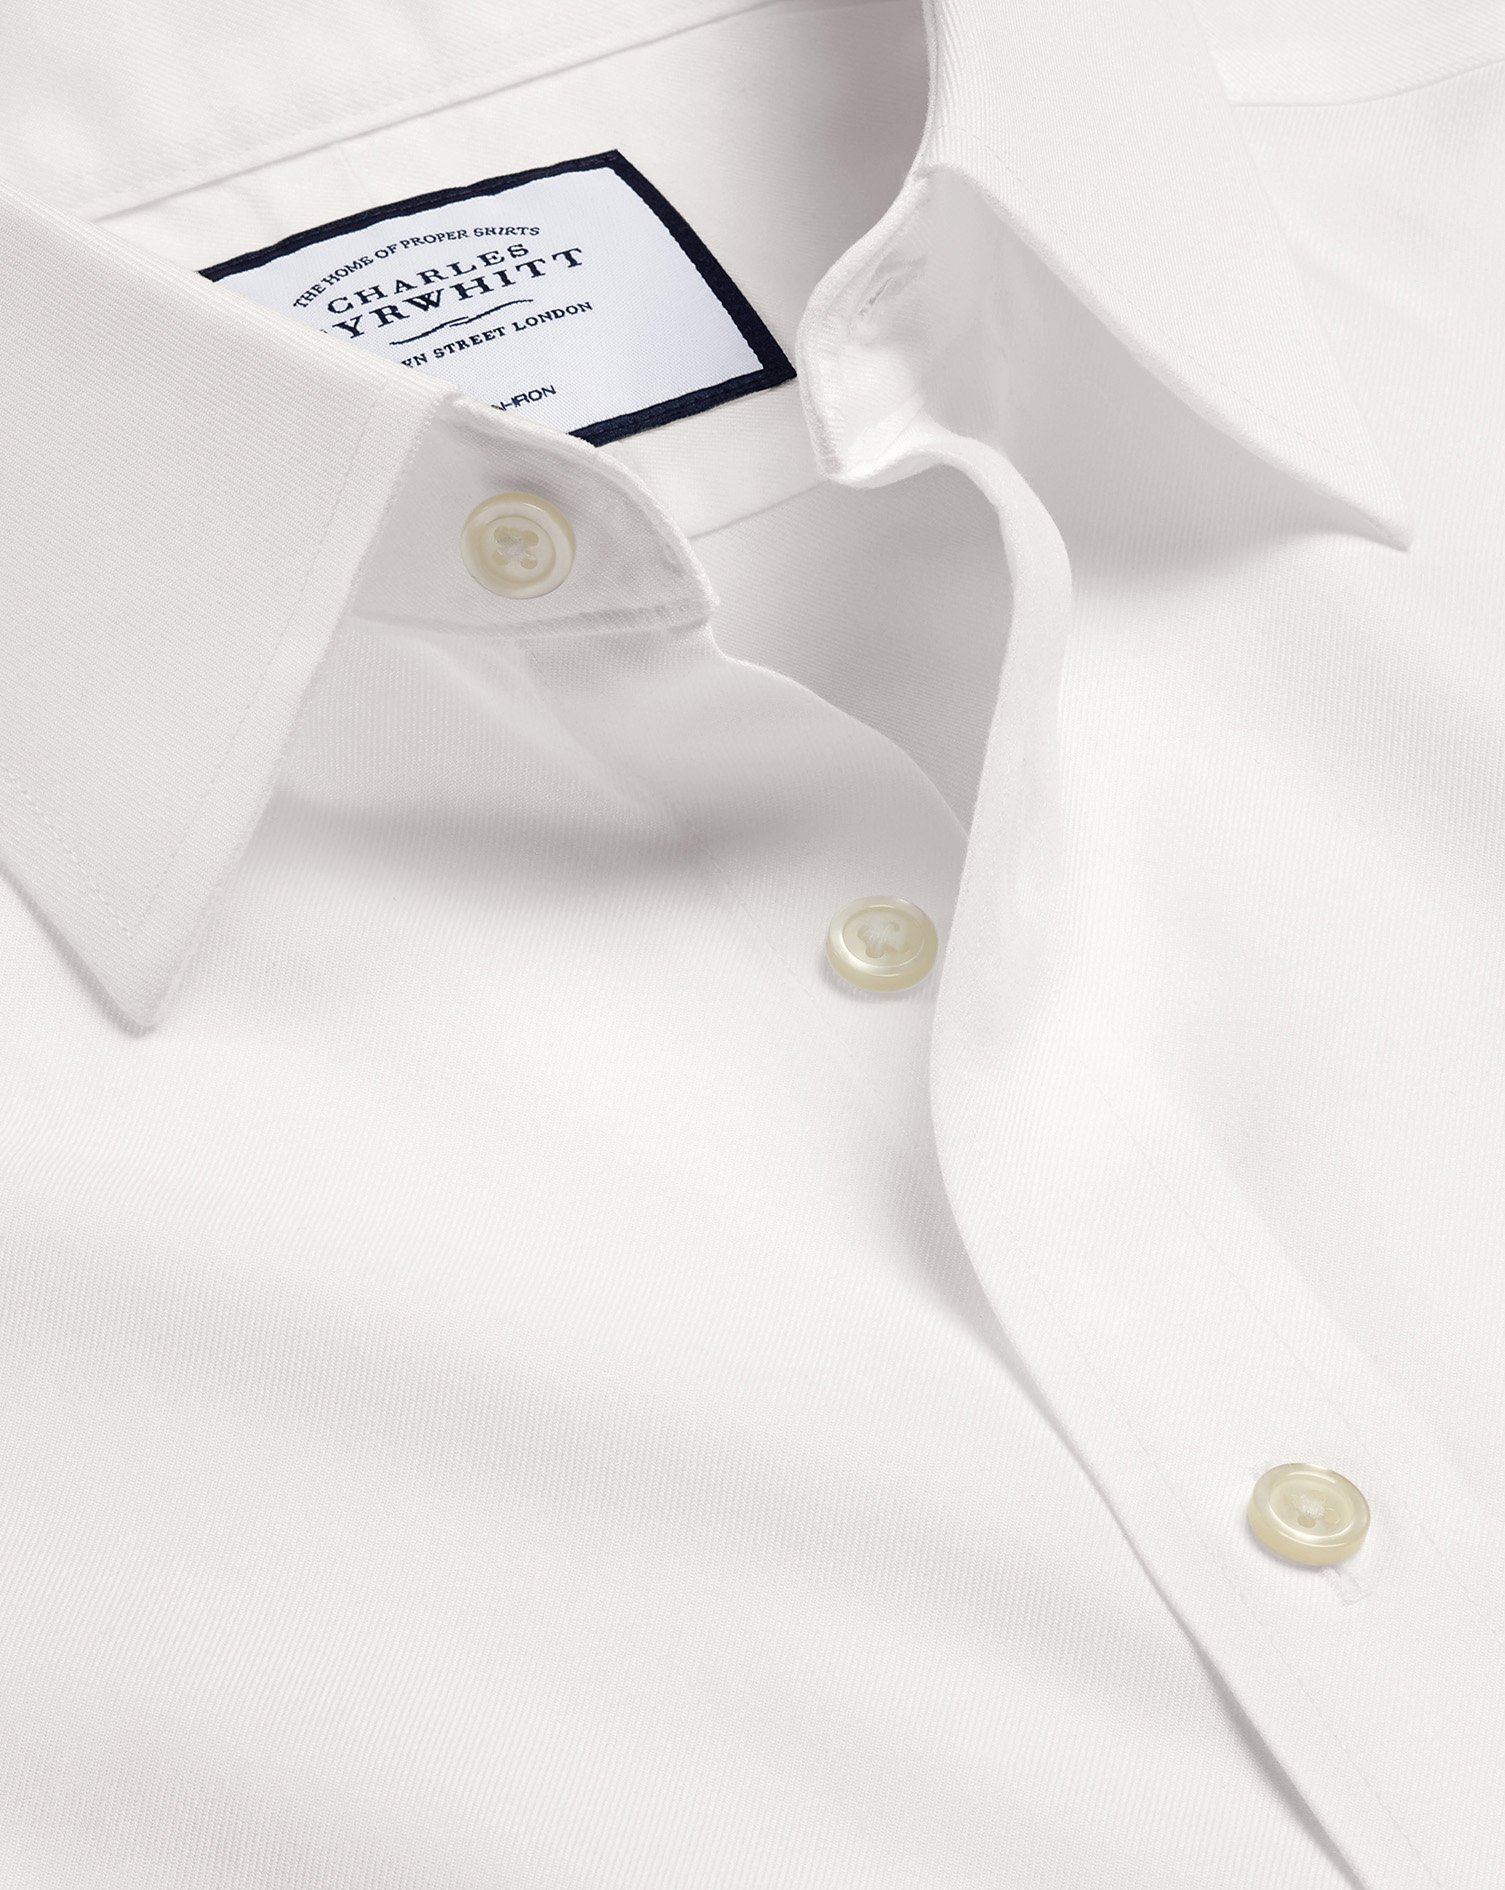 Men's Charles Tyrwhitt Non-Iron Twill Dress Shirt - Ivory White French Cuff Size Large Cotton
